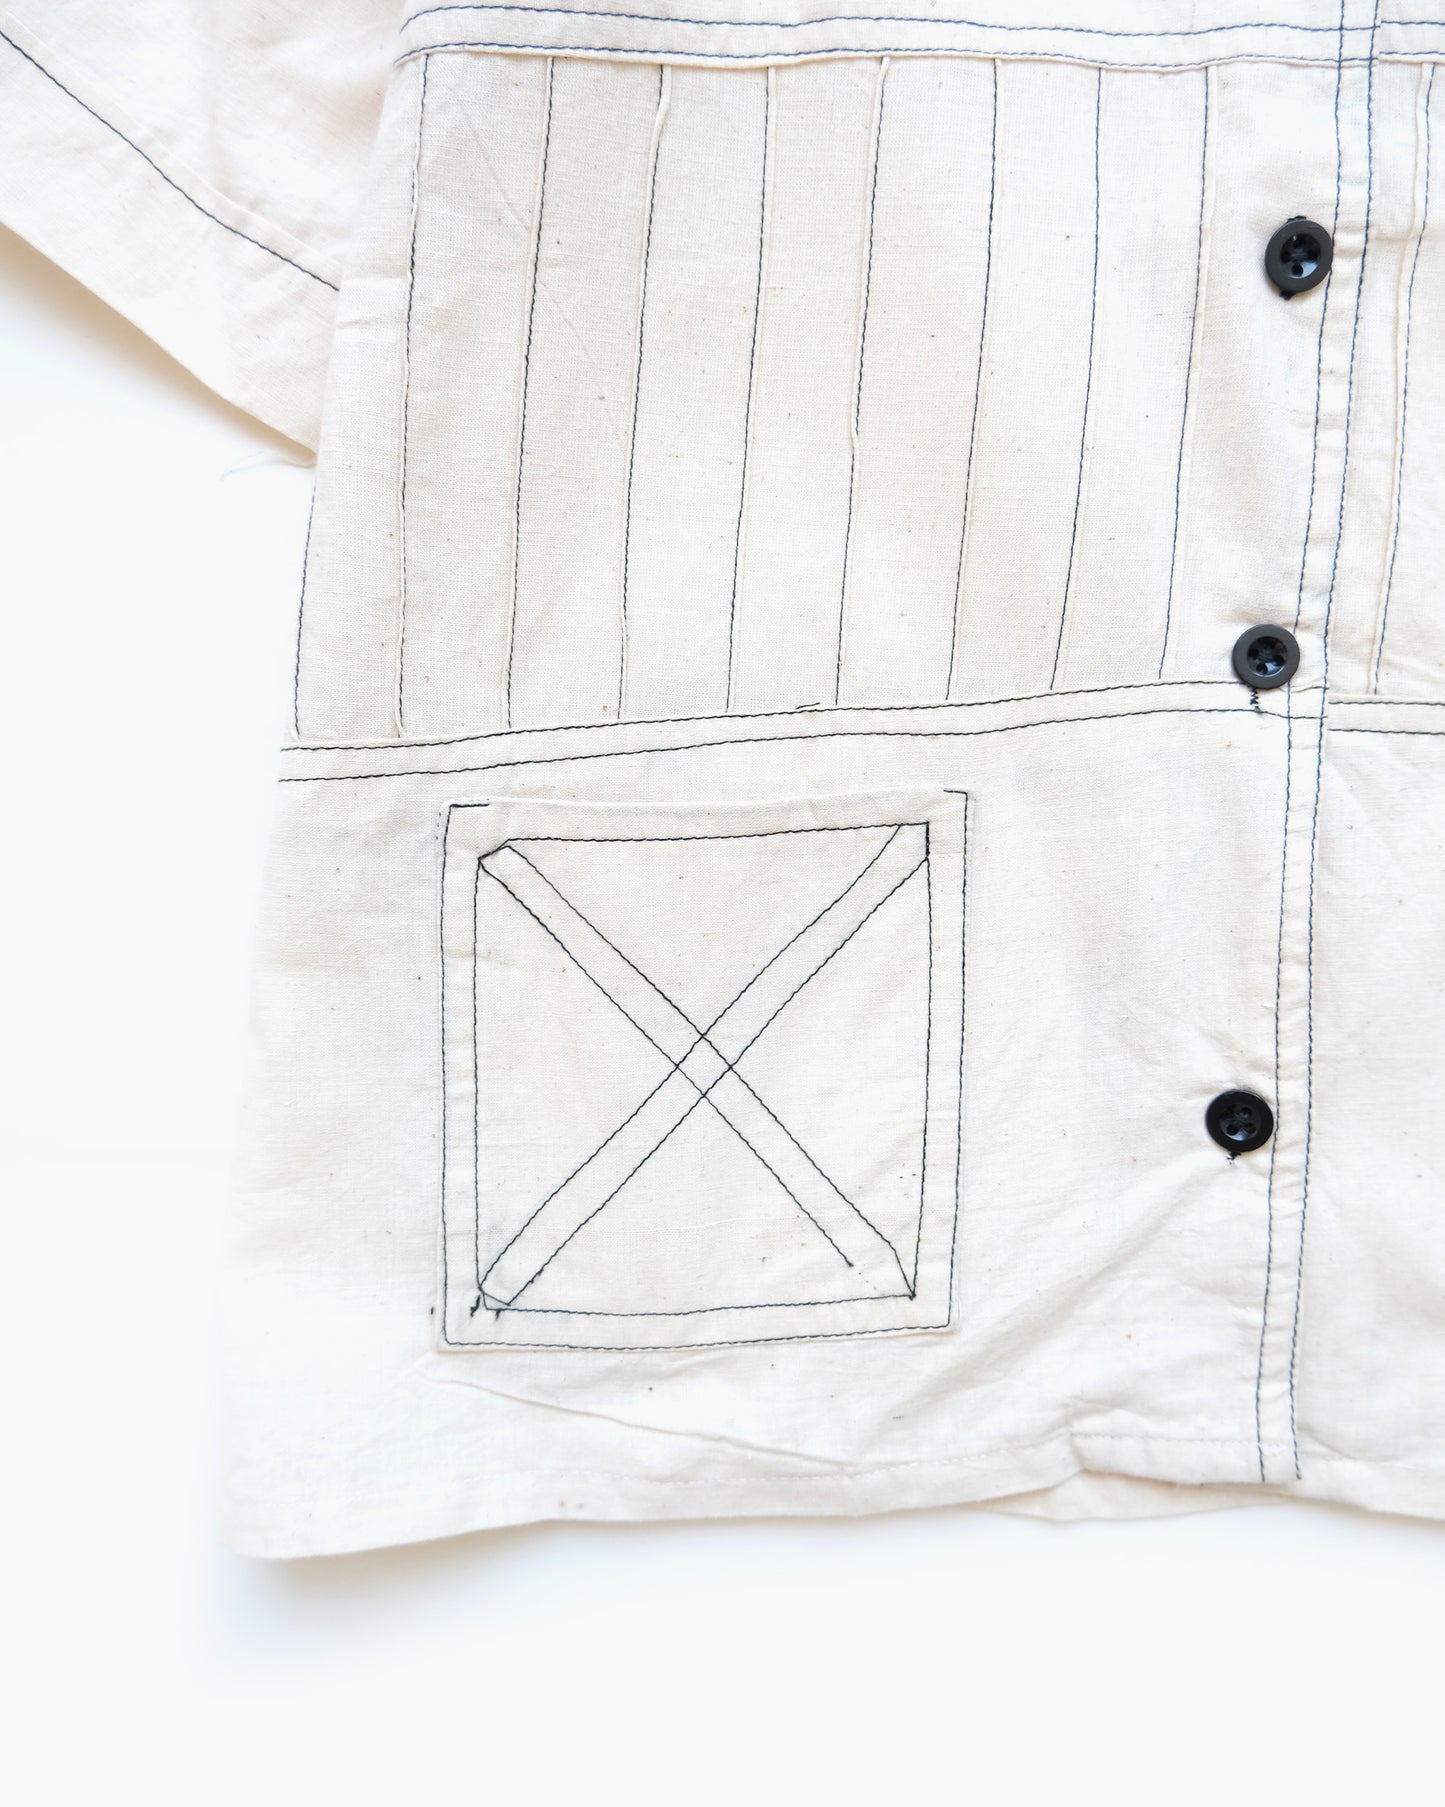 Hand-Made Cotton S/S Shirt